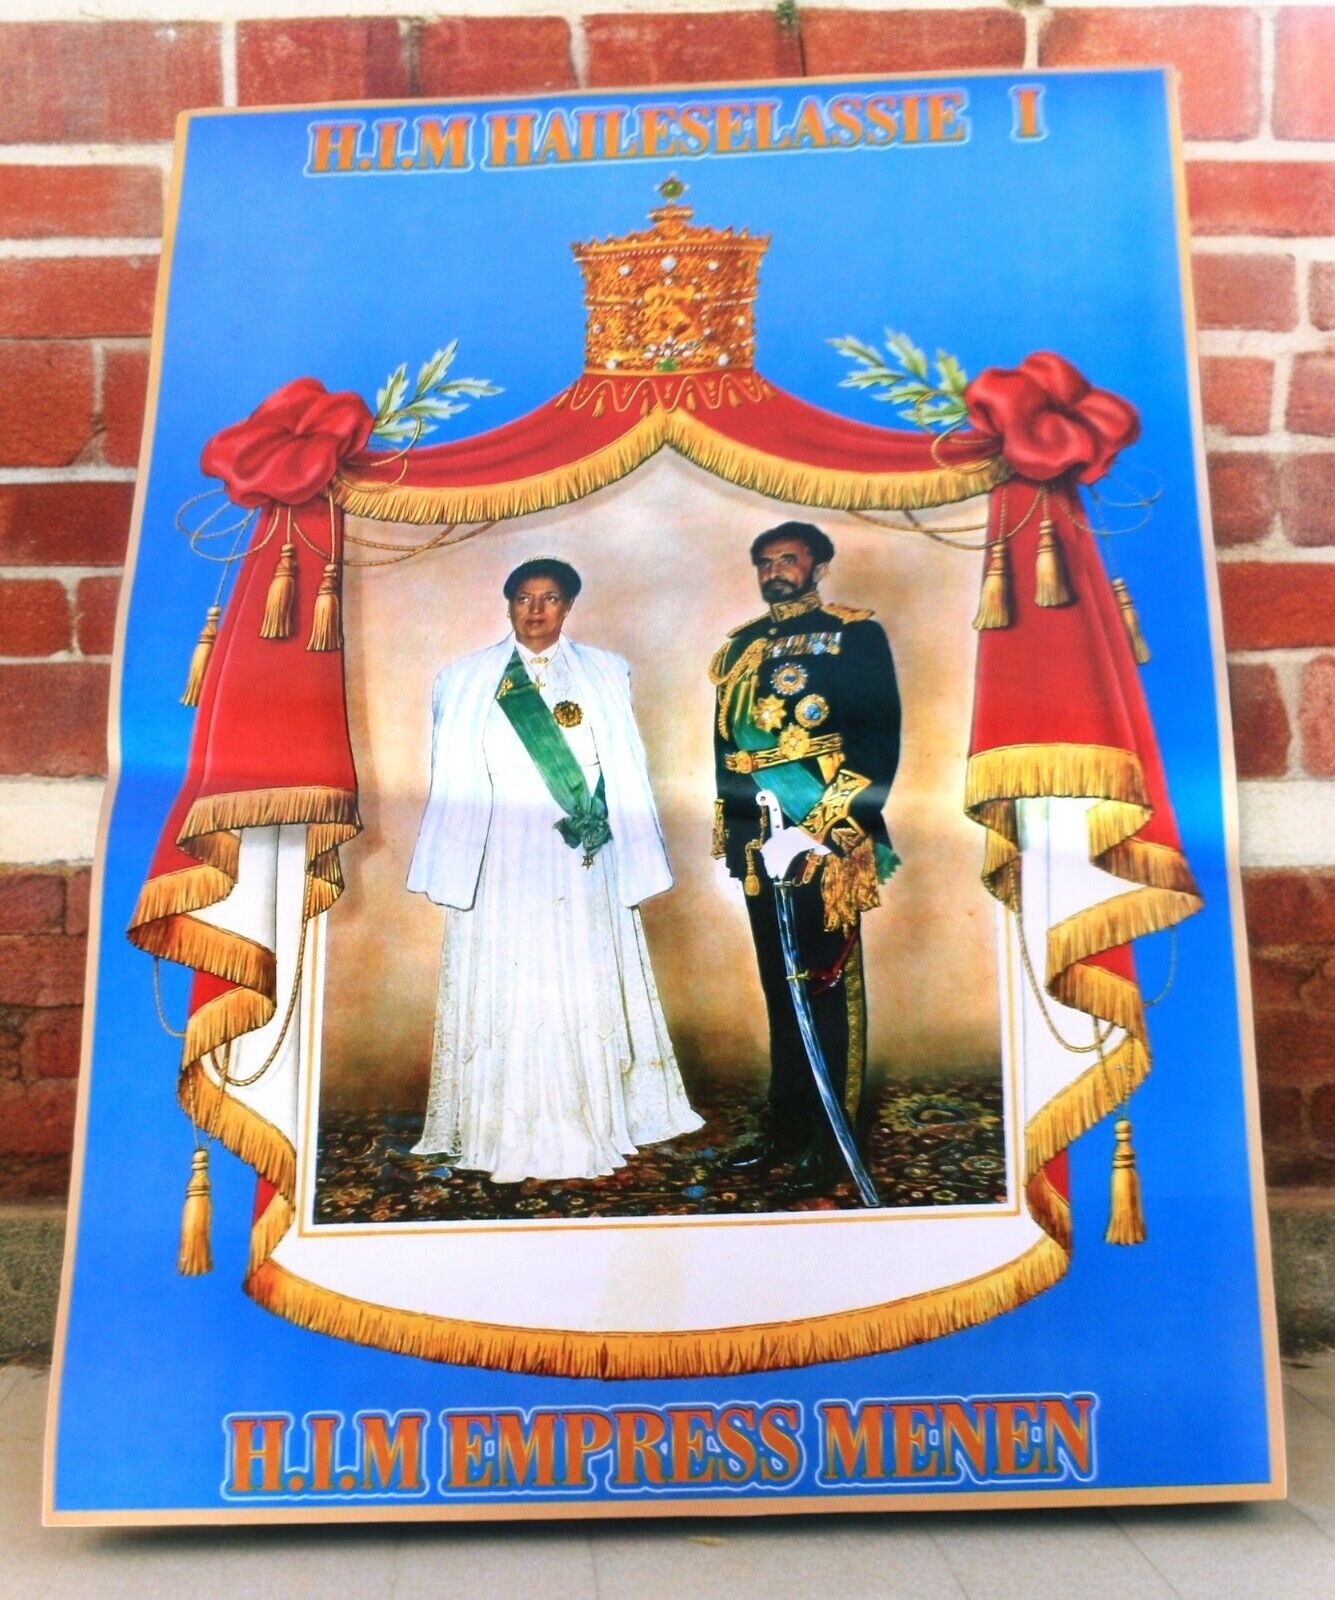 Ethiopian Emperor Haile selassie and Empress Mennen Poster Printed in 1960s.